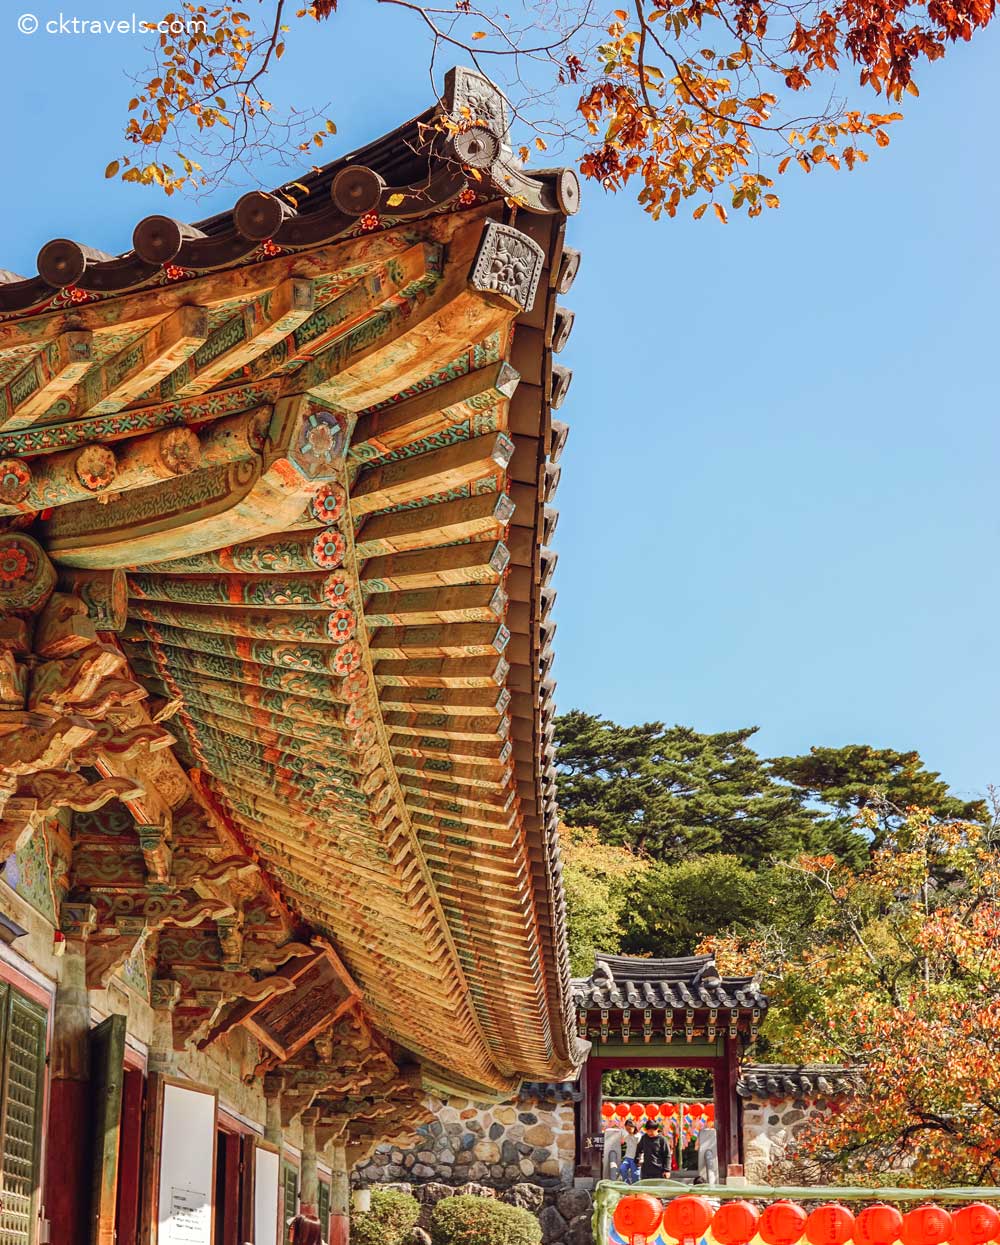 Bulguksa Temple in Gyeongju, South Korea in autumn / fall October